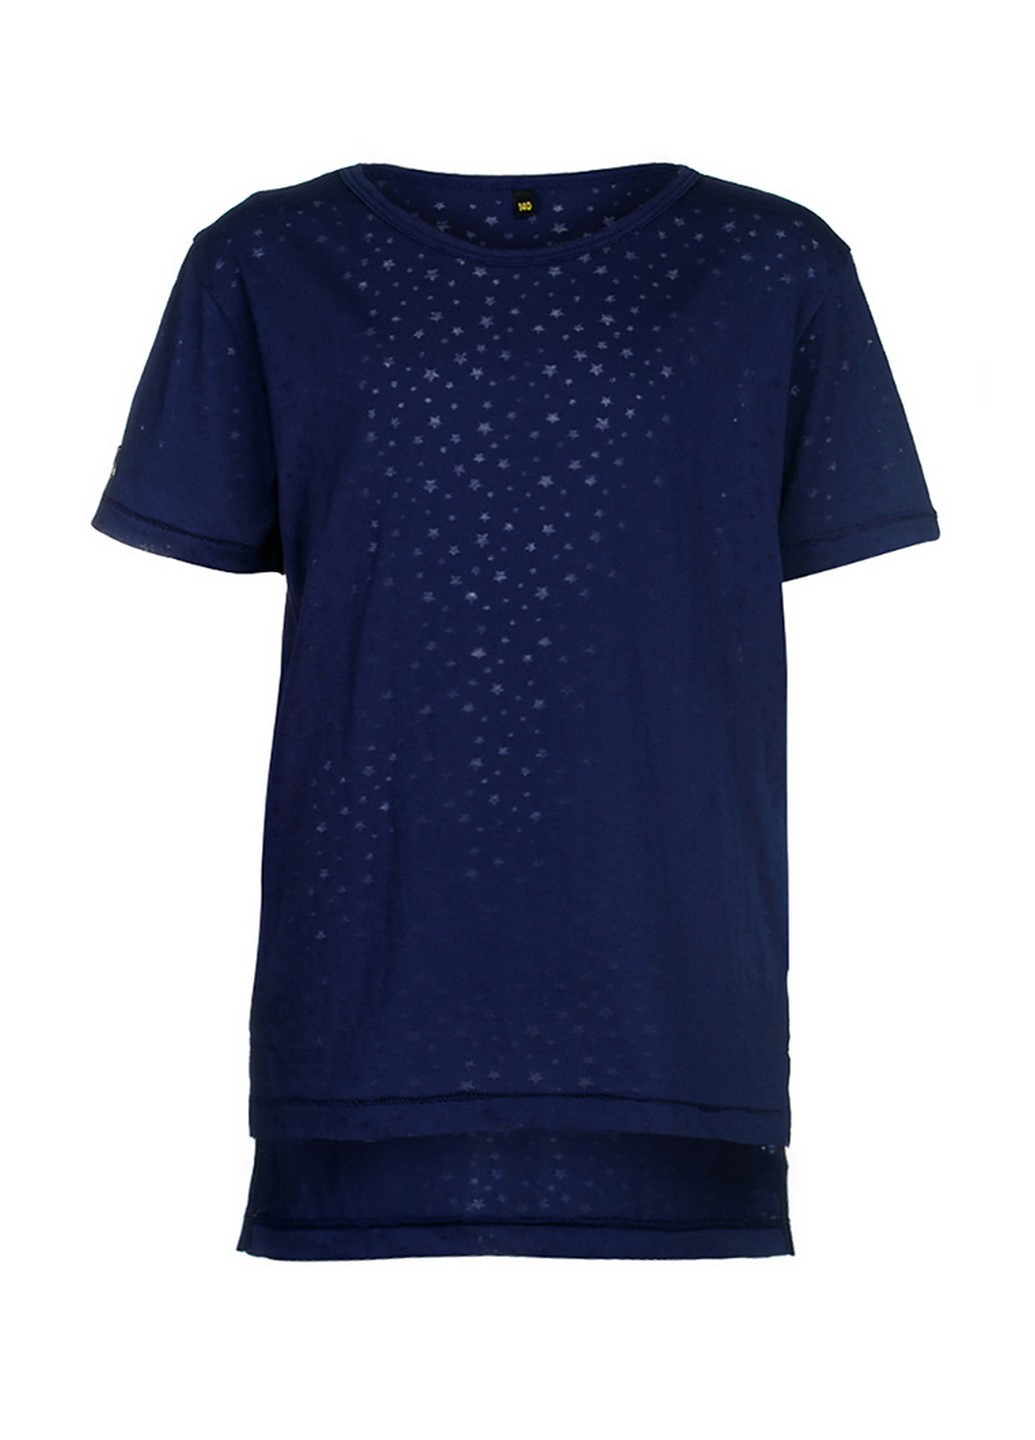 Темно-синяя летняя футболка Yumster Темно-синяя футболка звезды